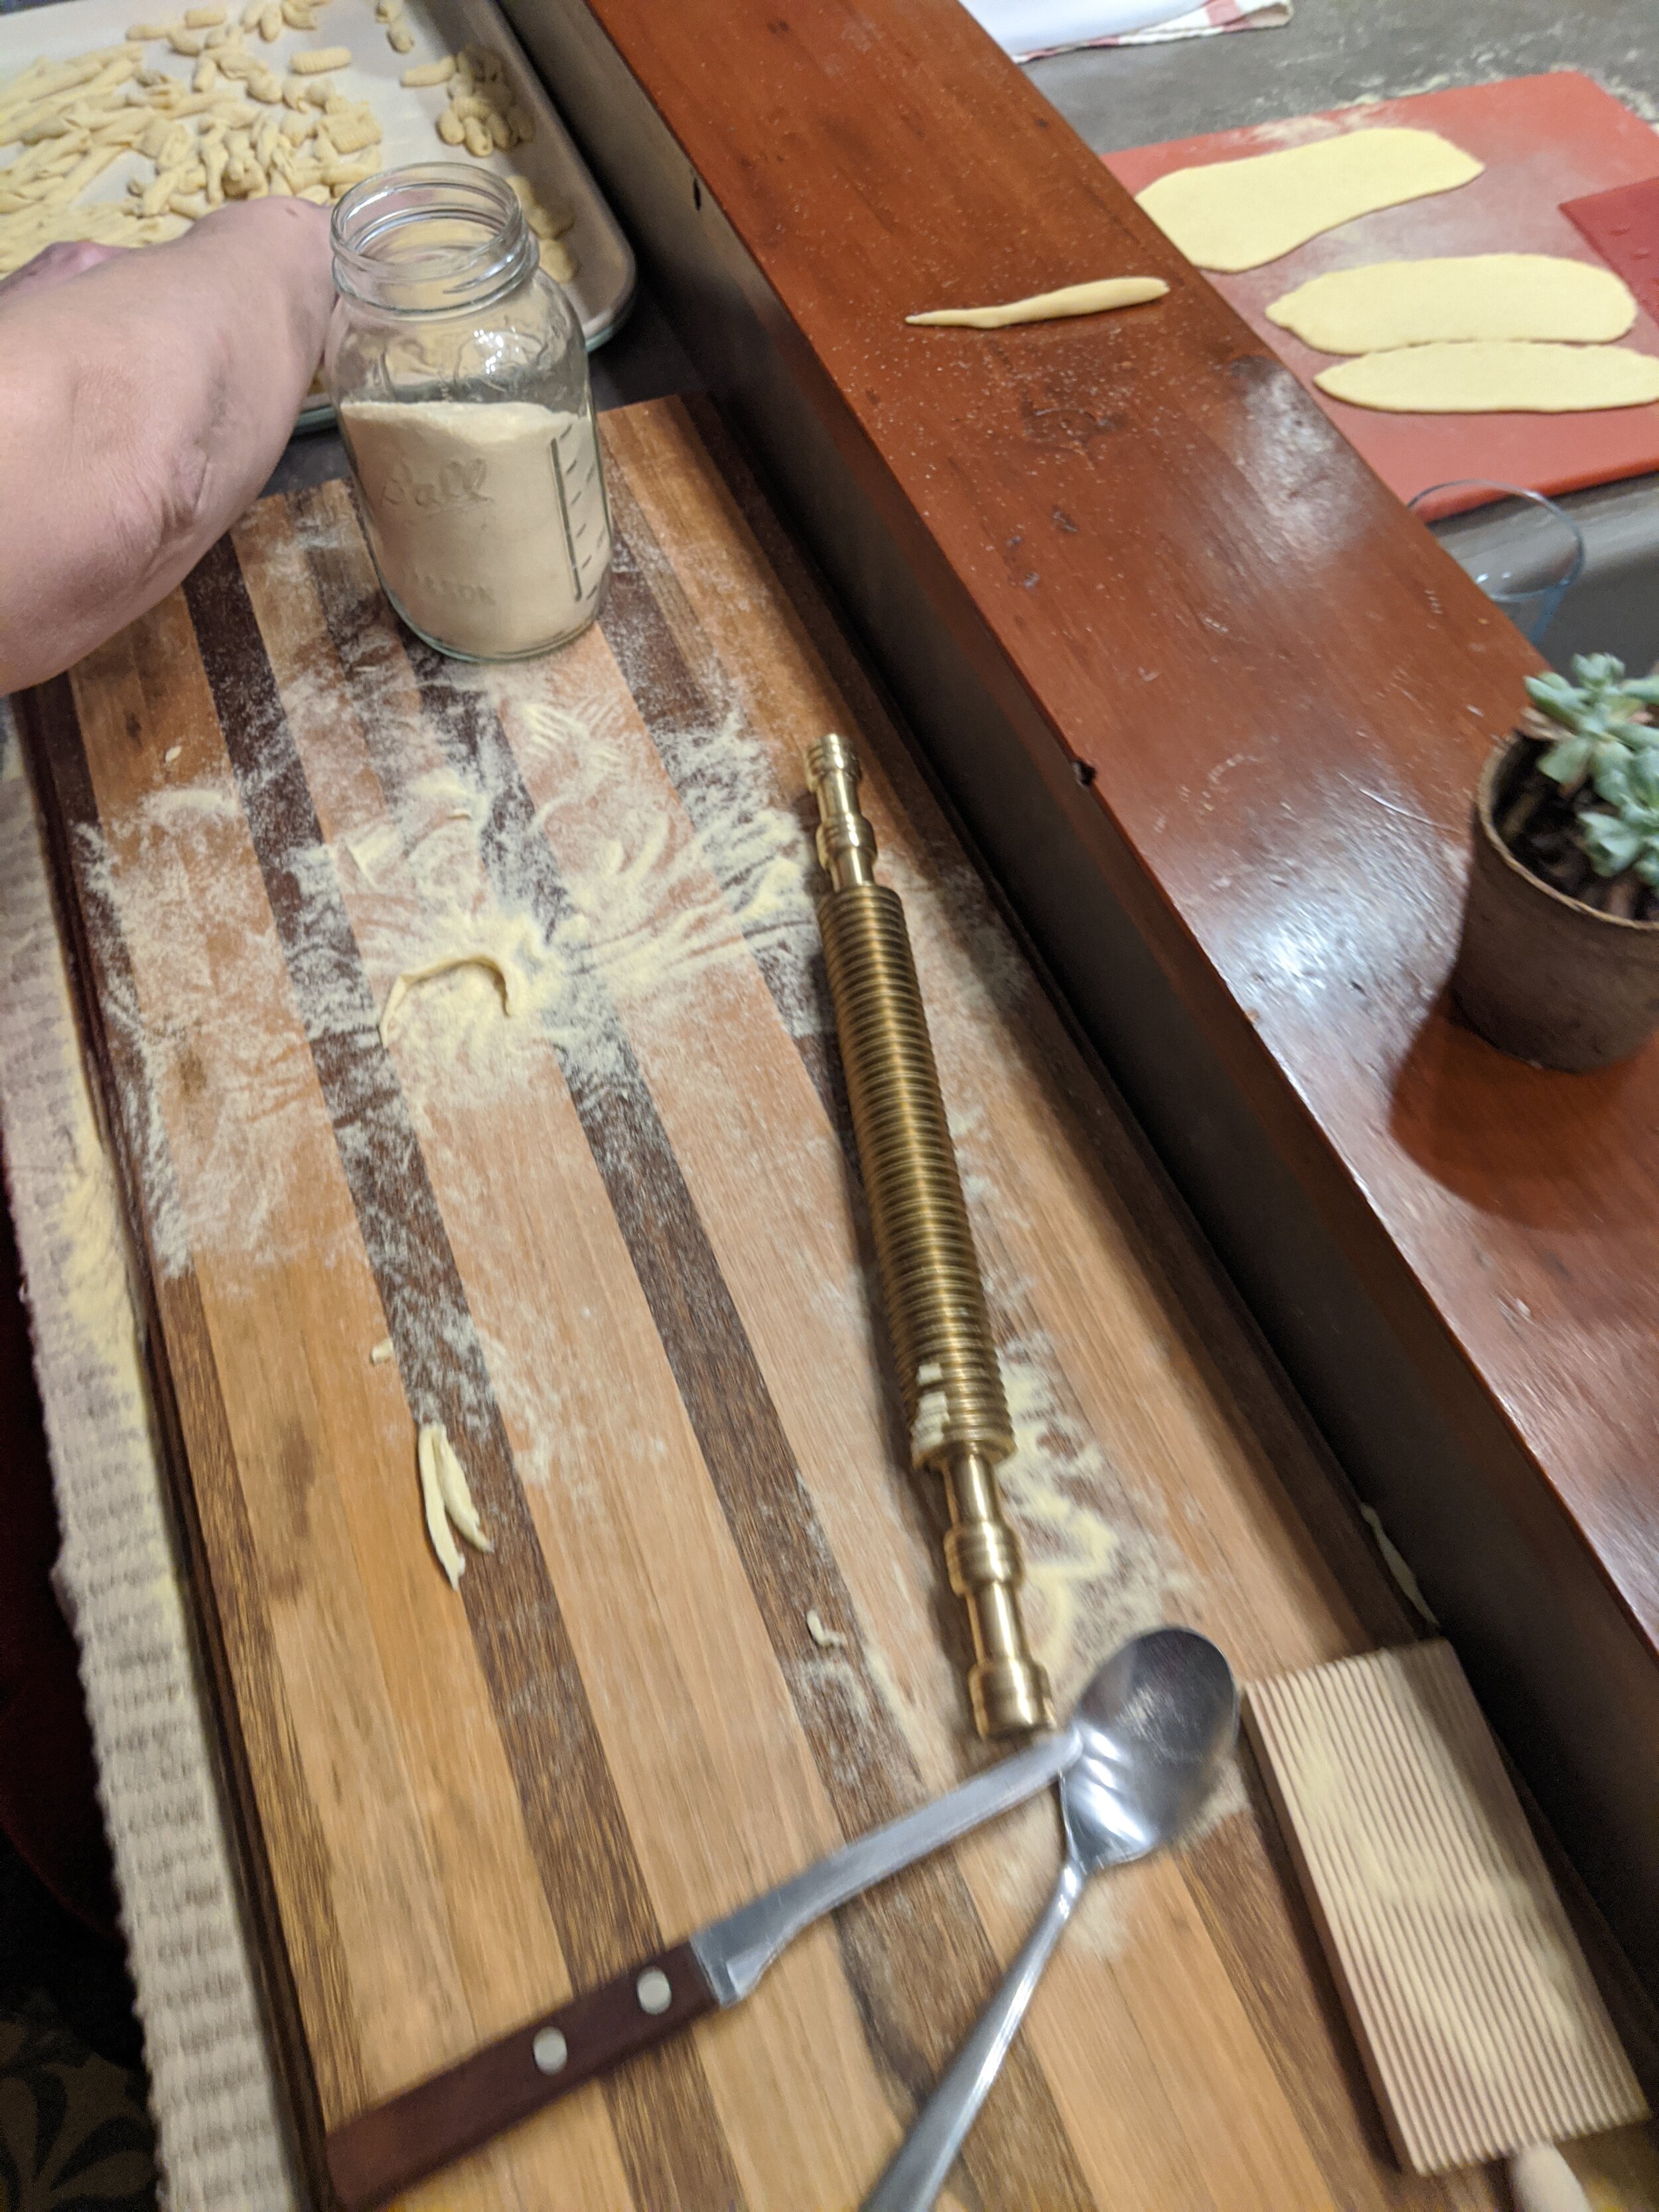 Tools of Pasta Making